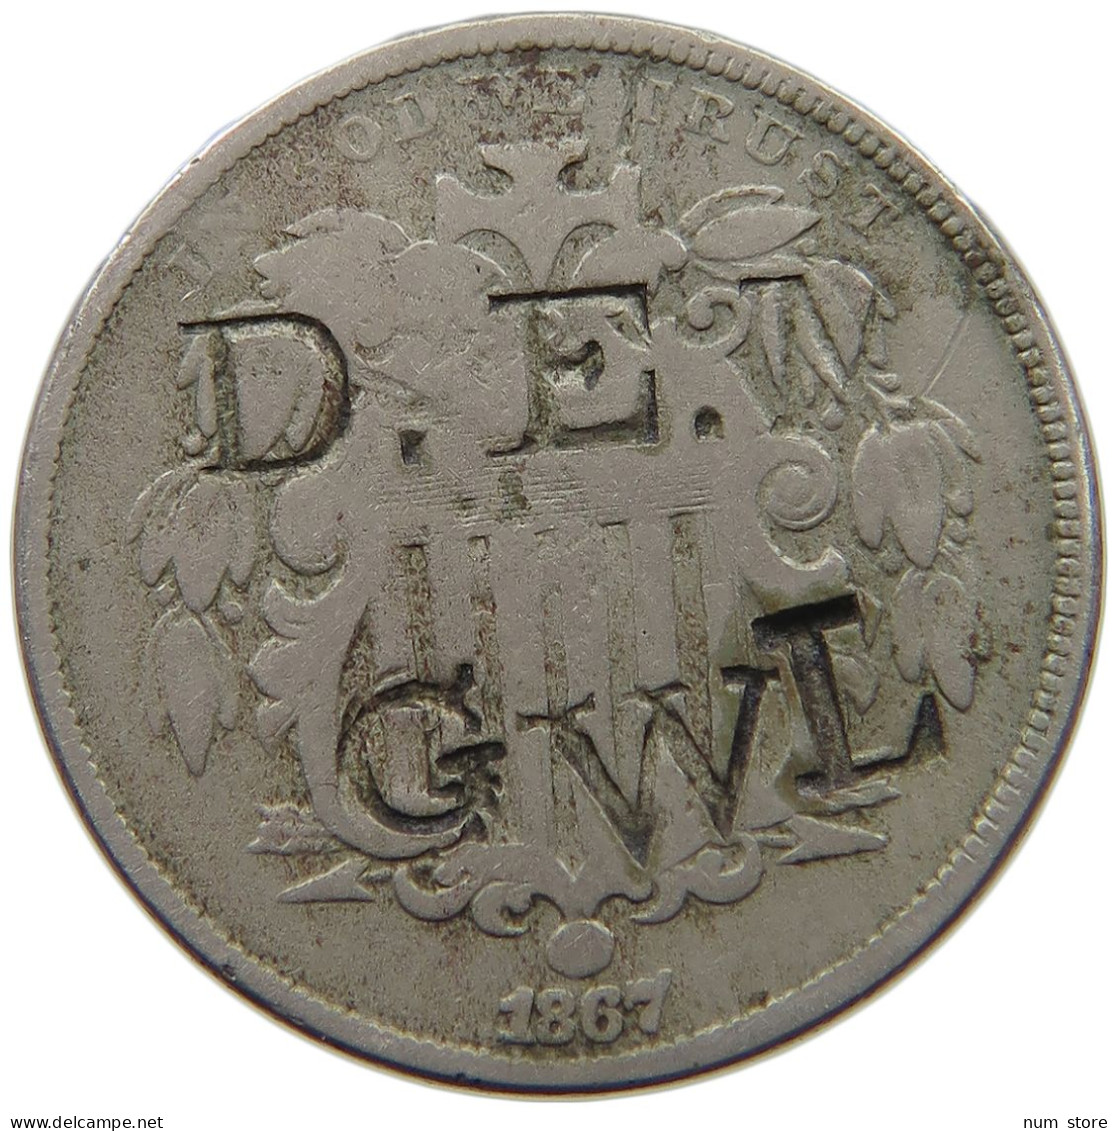 UNITED STATES OF AMERICA NICKEL 1867 COUNTERMARKED DEM / DEM GWL #t001 0241 - 1866-83: Escudo